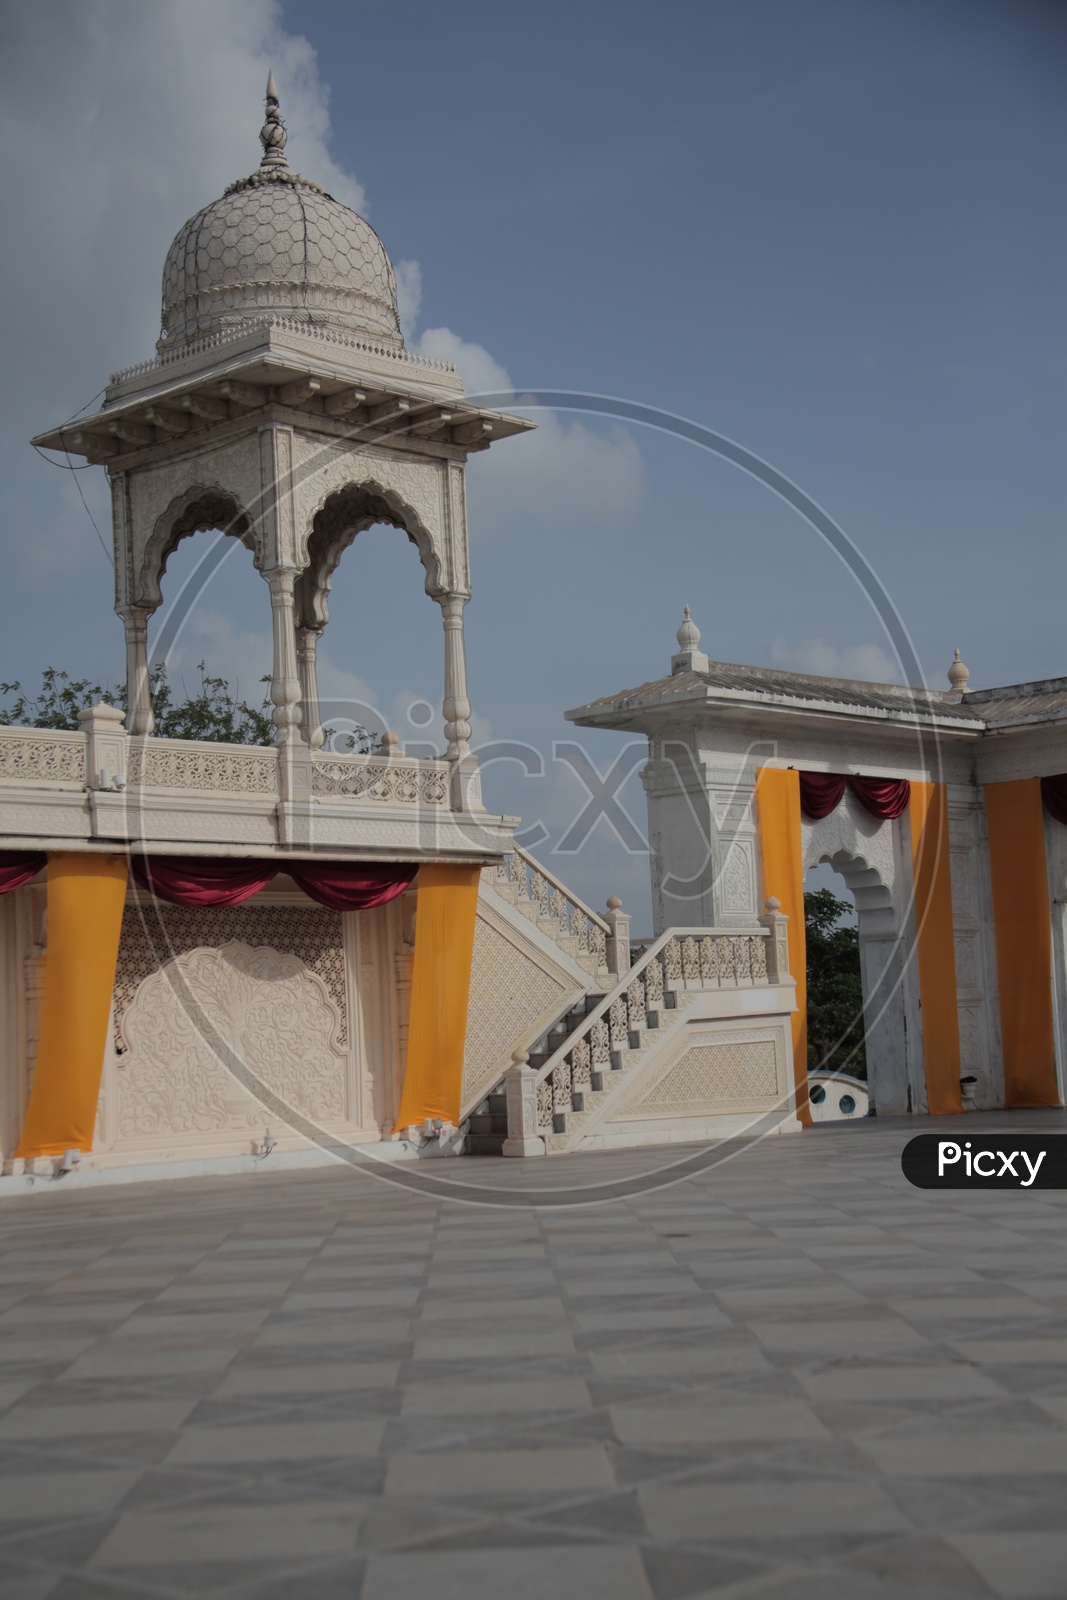 Architecture of a Mughal garden in Ramoji film city